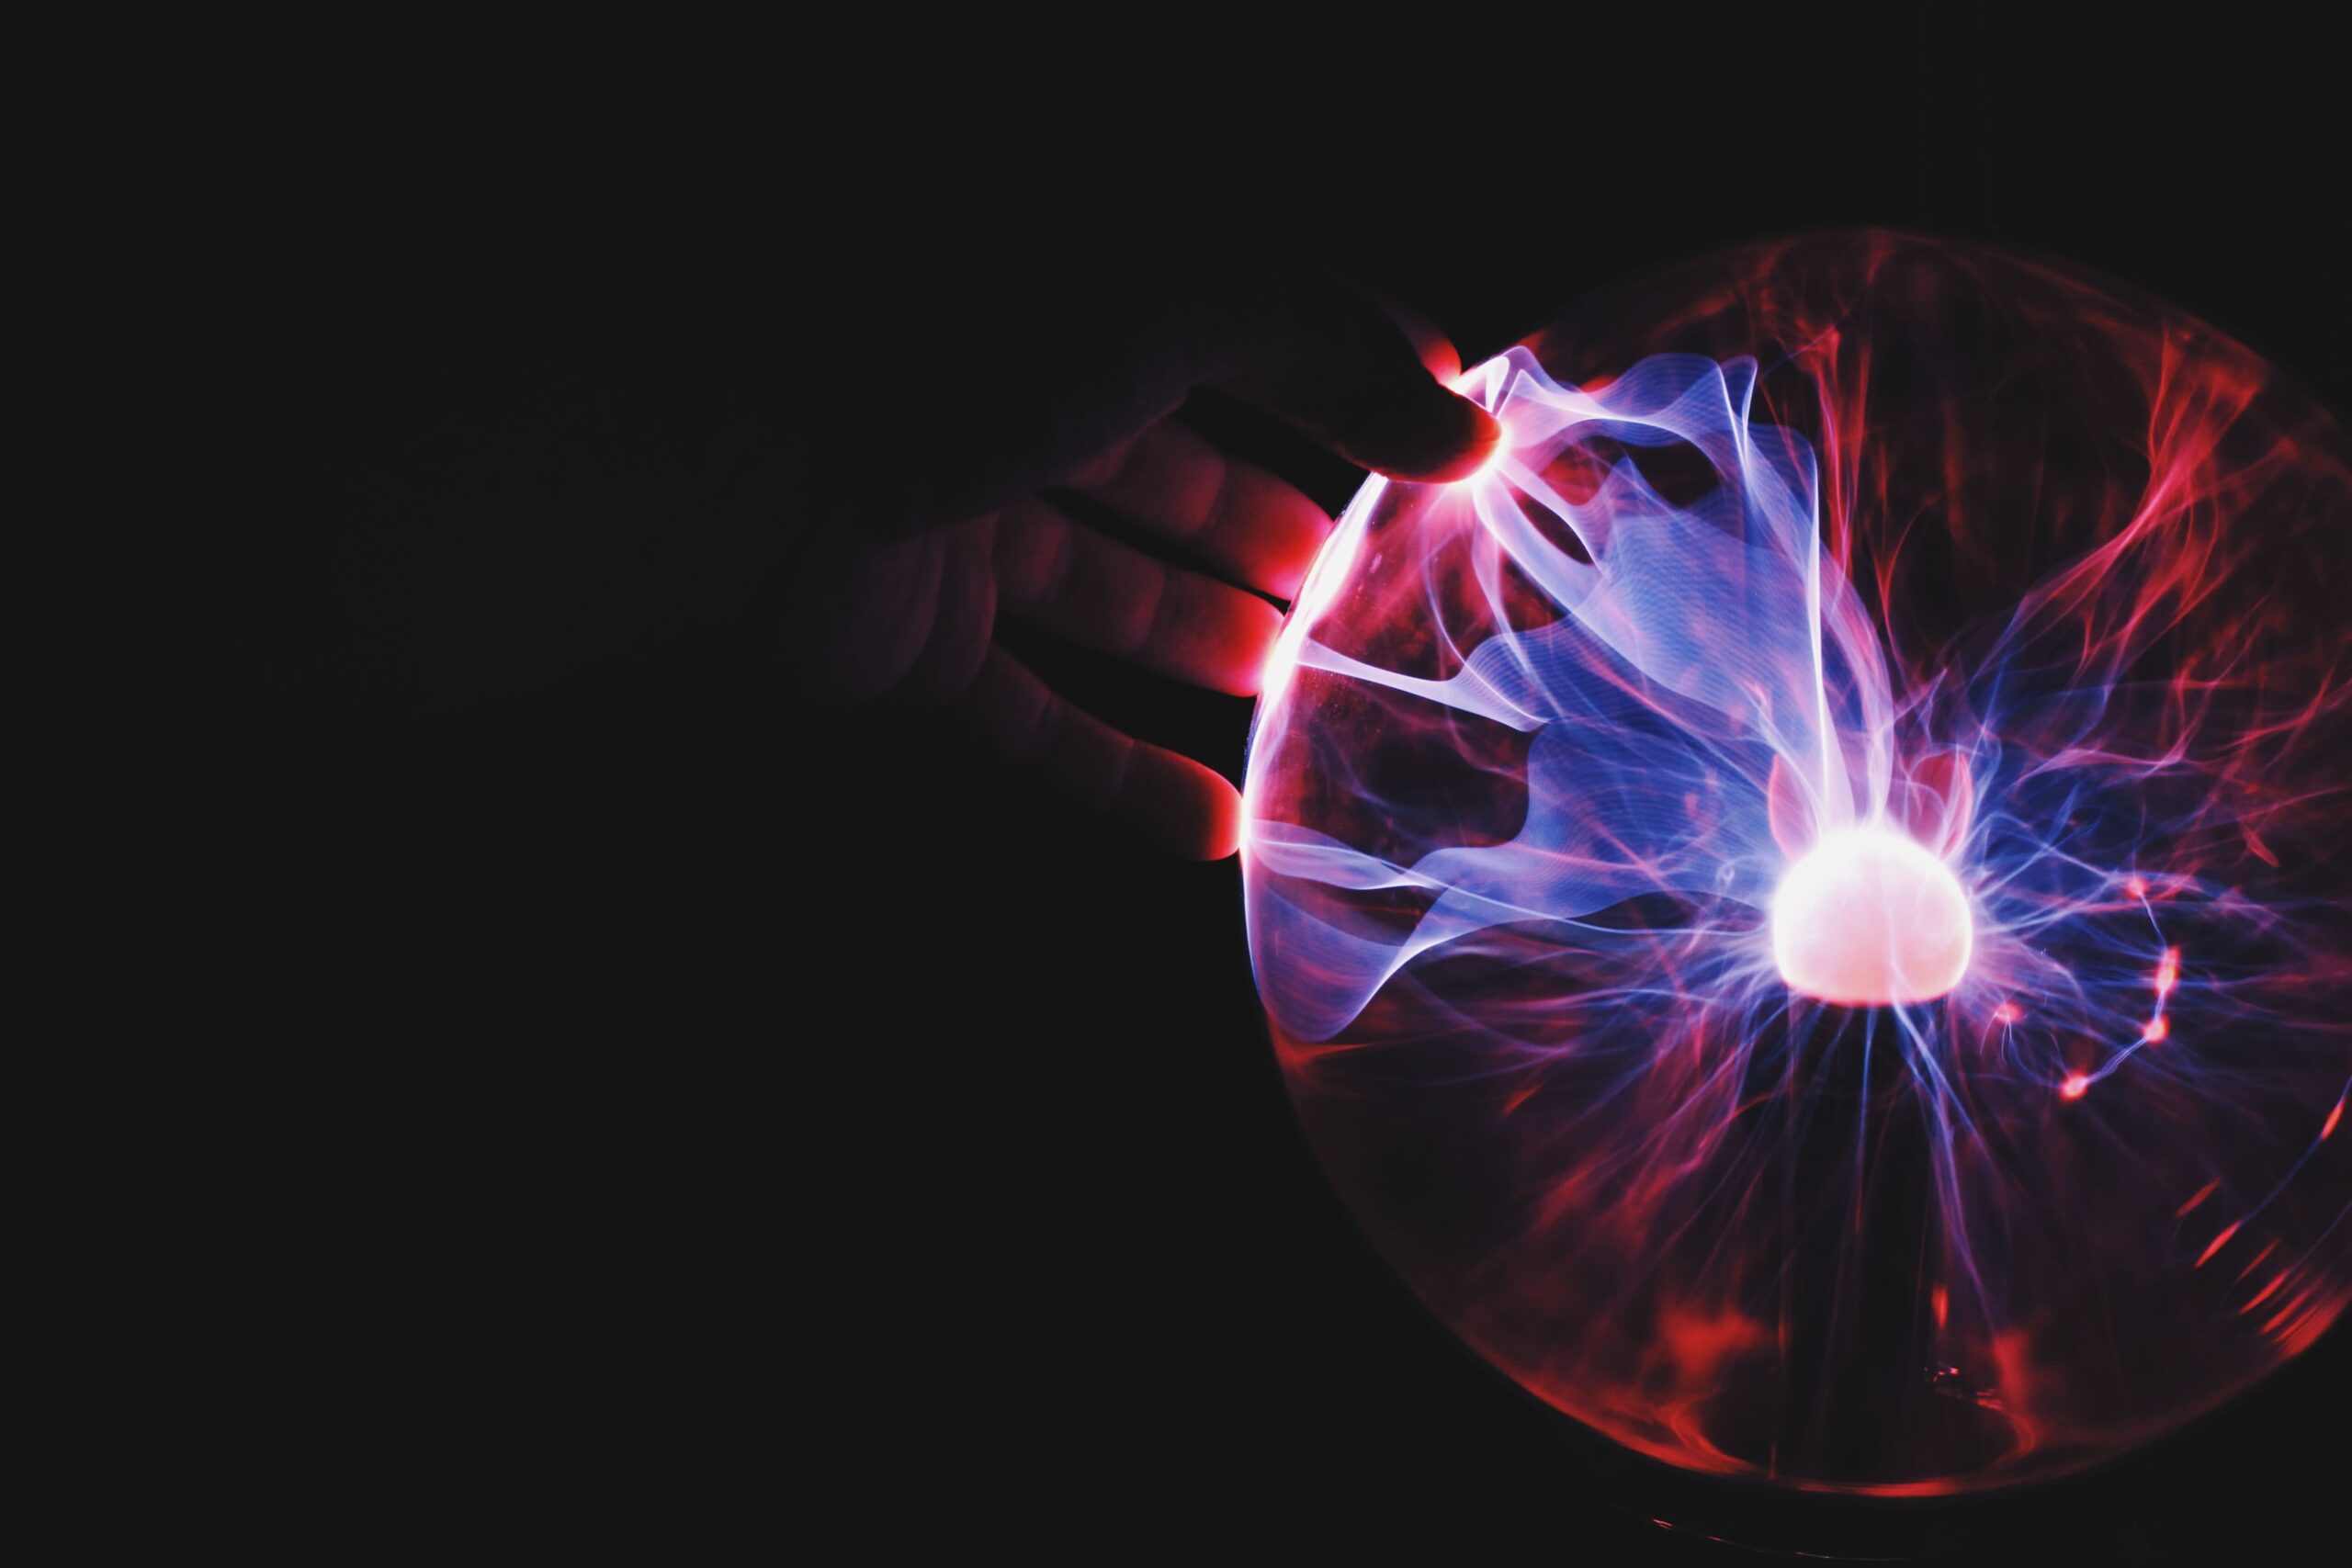 A hand touching a plasma ball